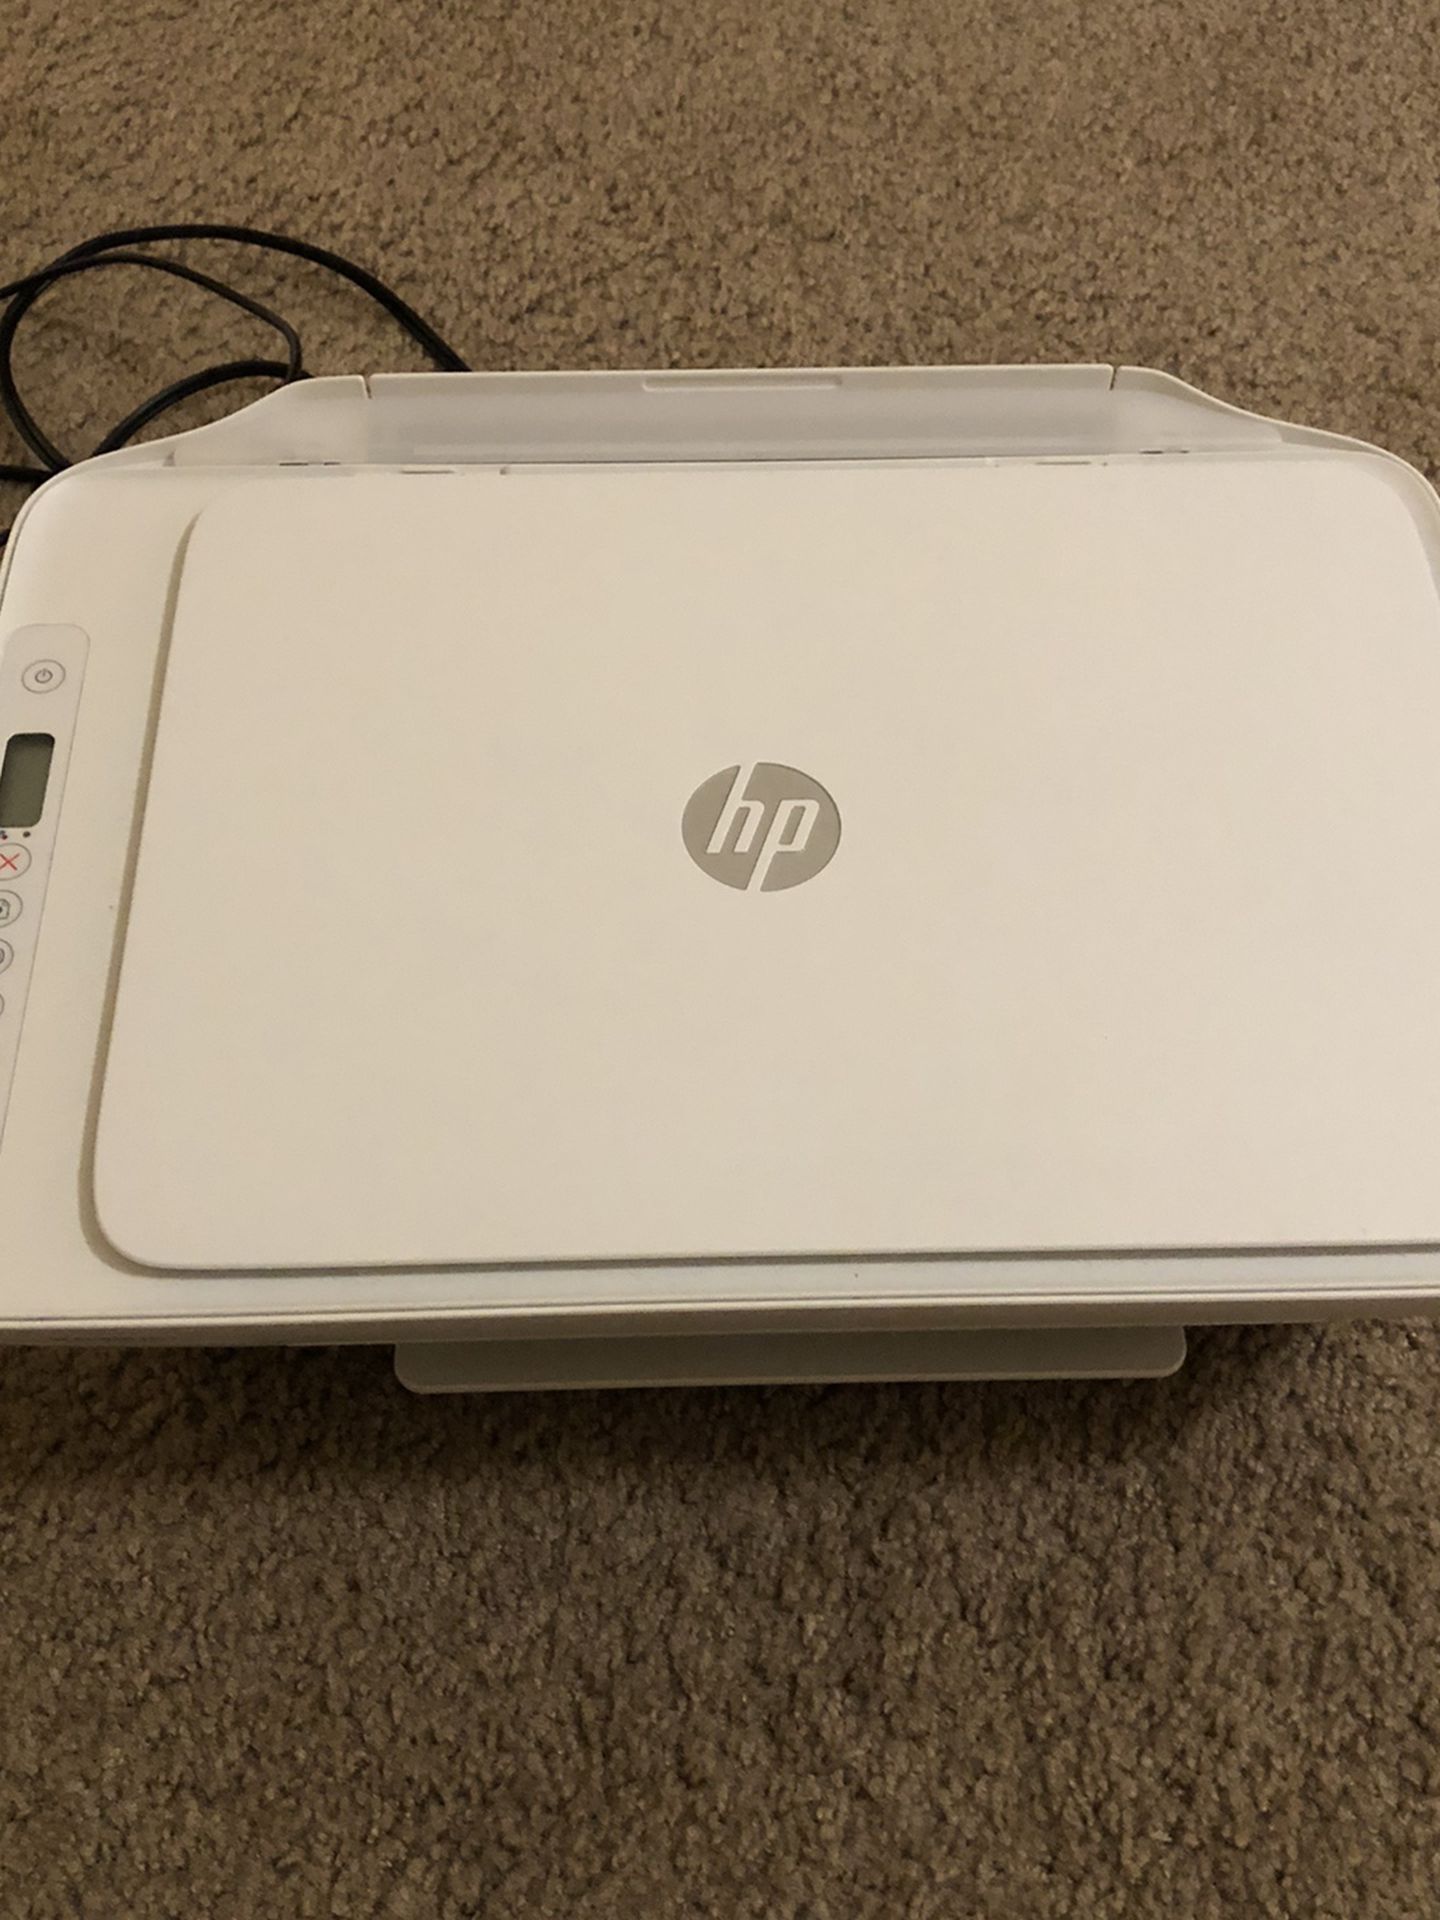 HP DeskJet 2652 Printer + Ink + Two Types Papers